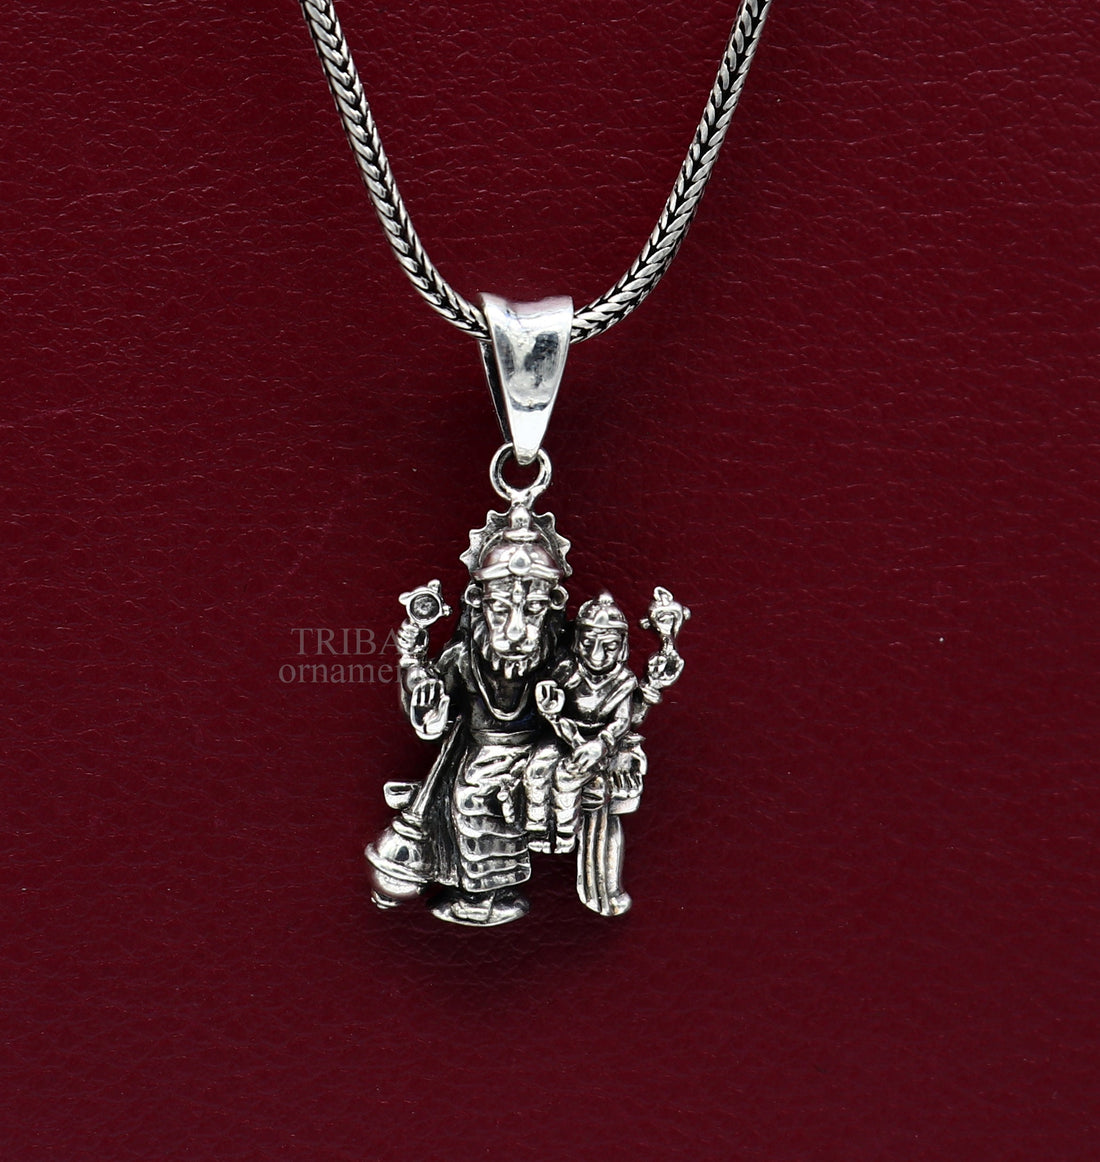 925 sterling silver handmade divine Vishnu with Laxmi (narsimha)pendant, amazing stylish unisex pendant personalized jewelry ssp1564 - TRIBAL ORNAMENTS